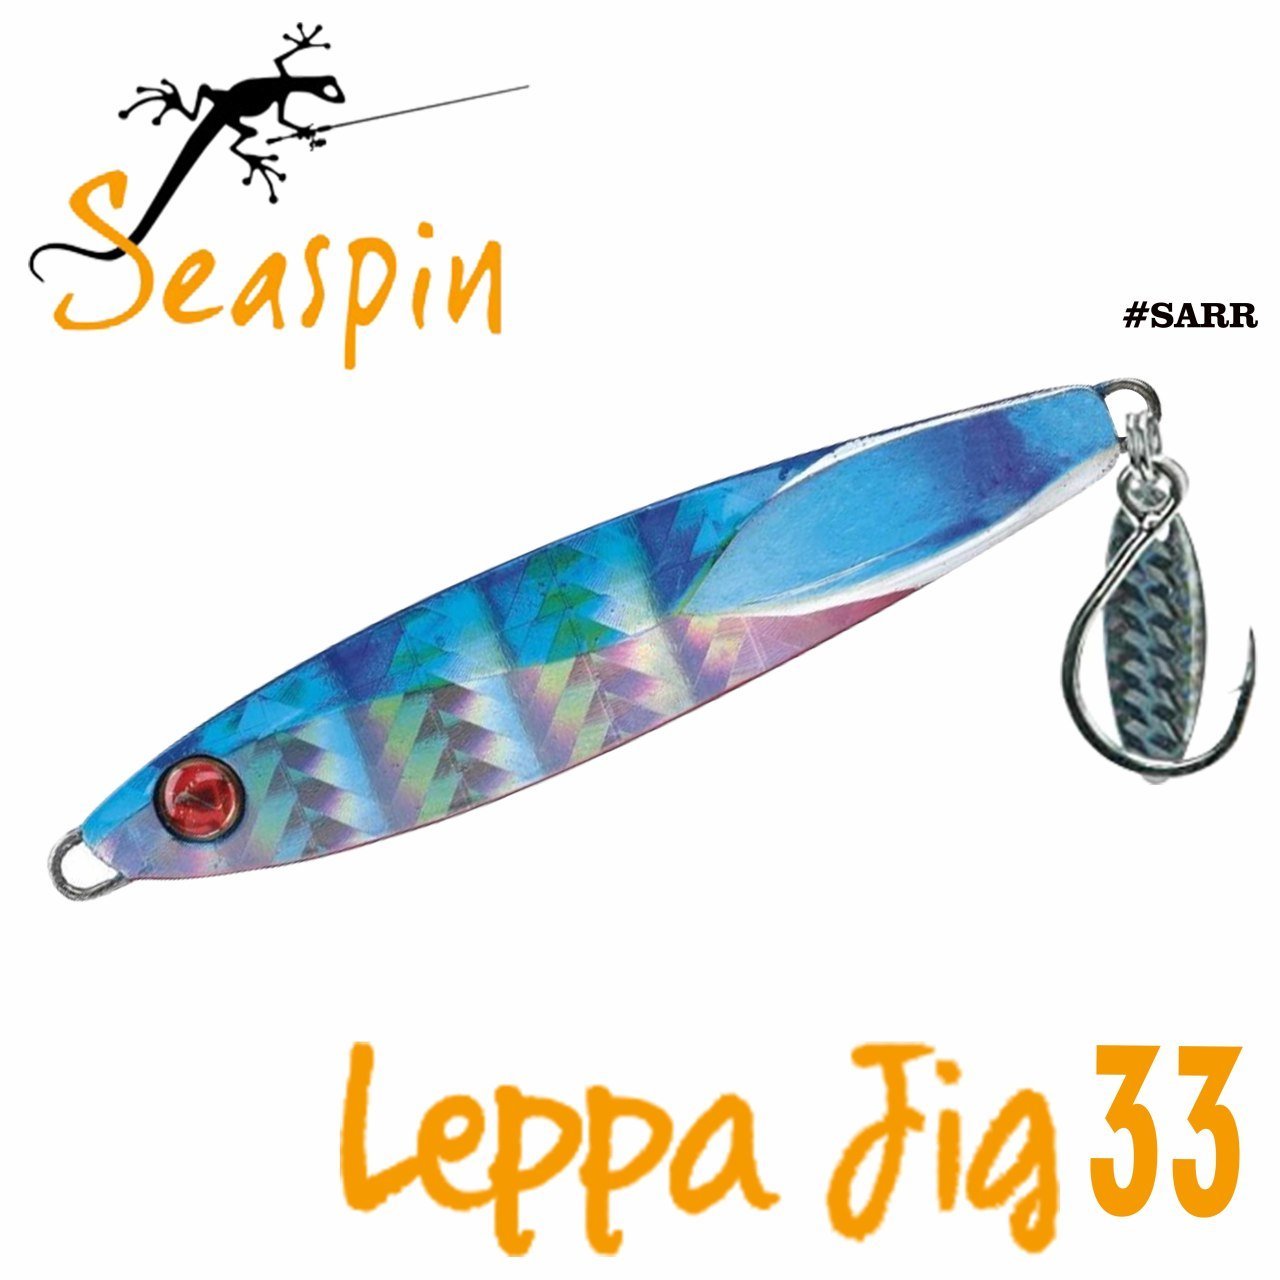 Seaspin Leppa 33gr jig yem #SARR